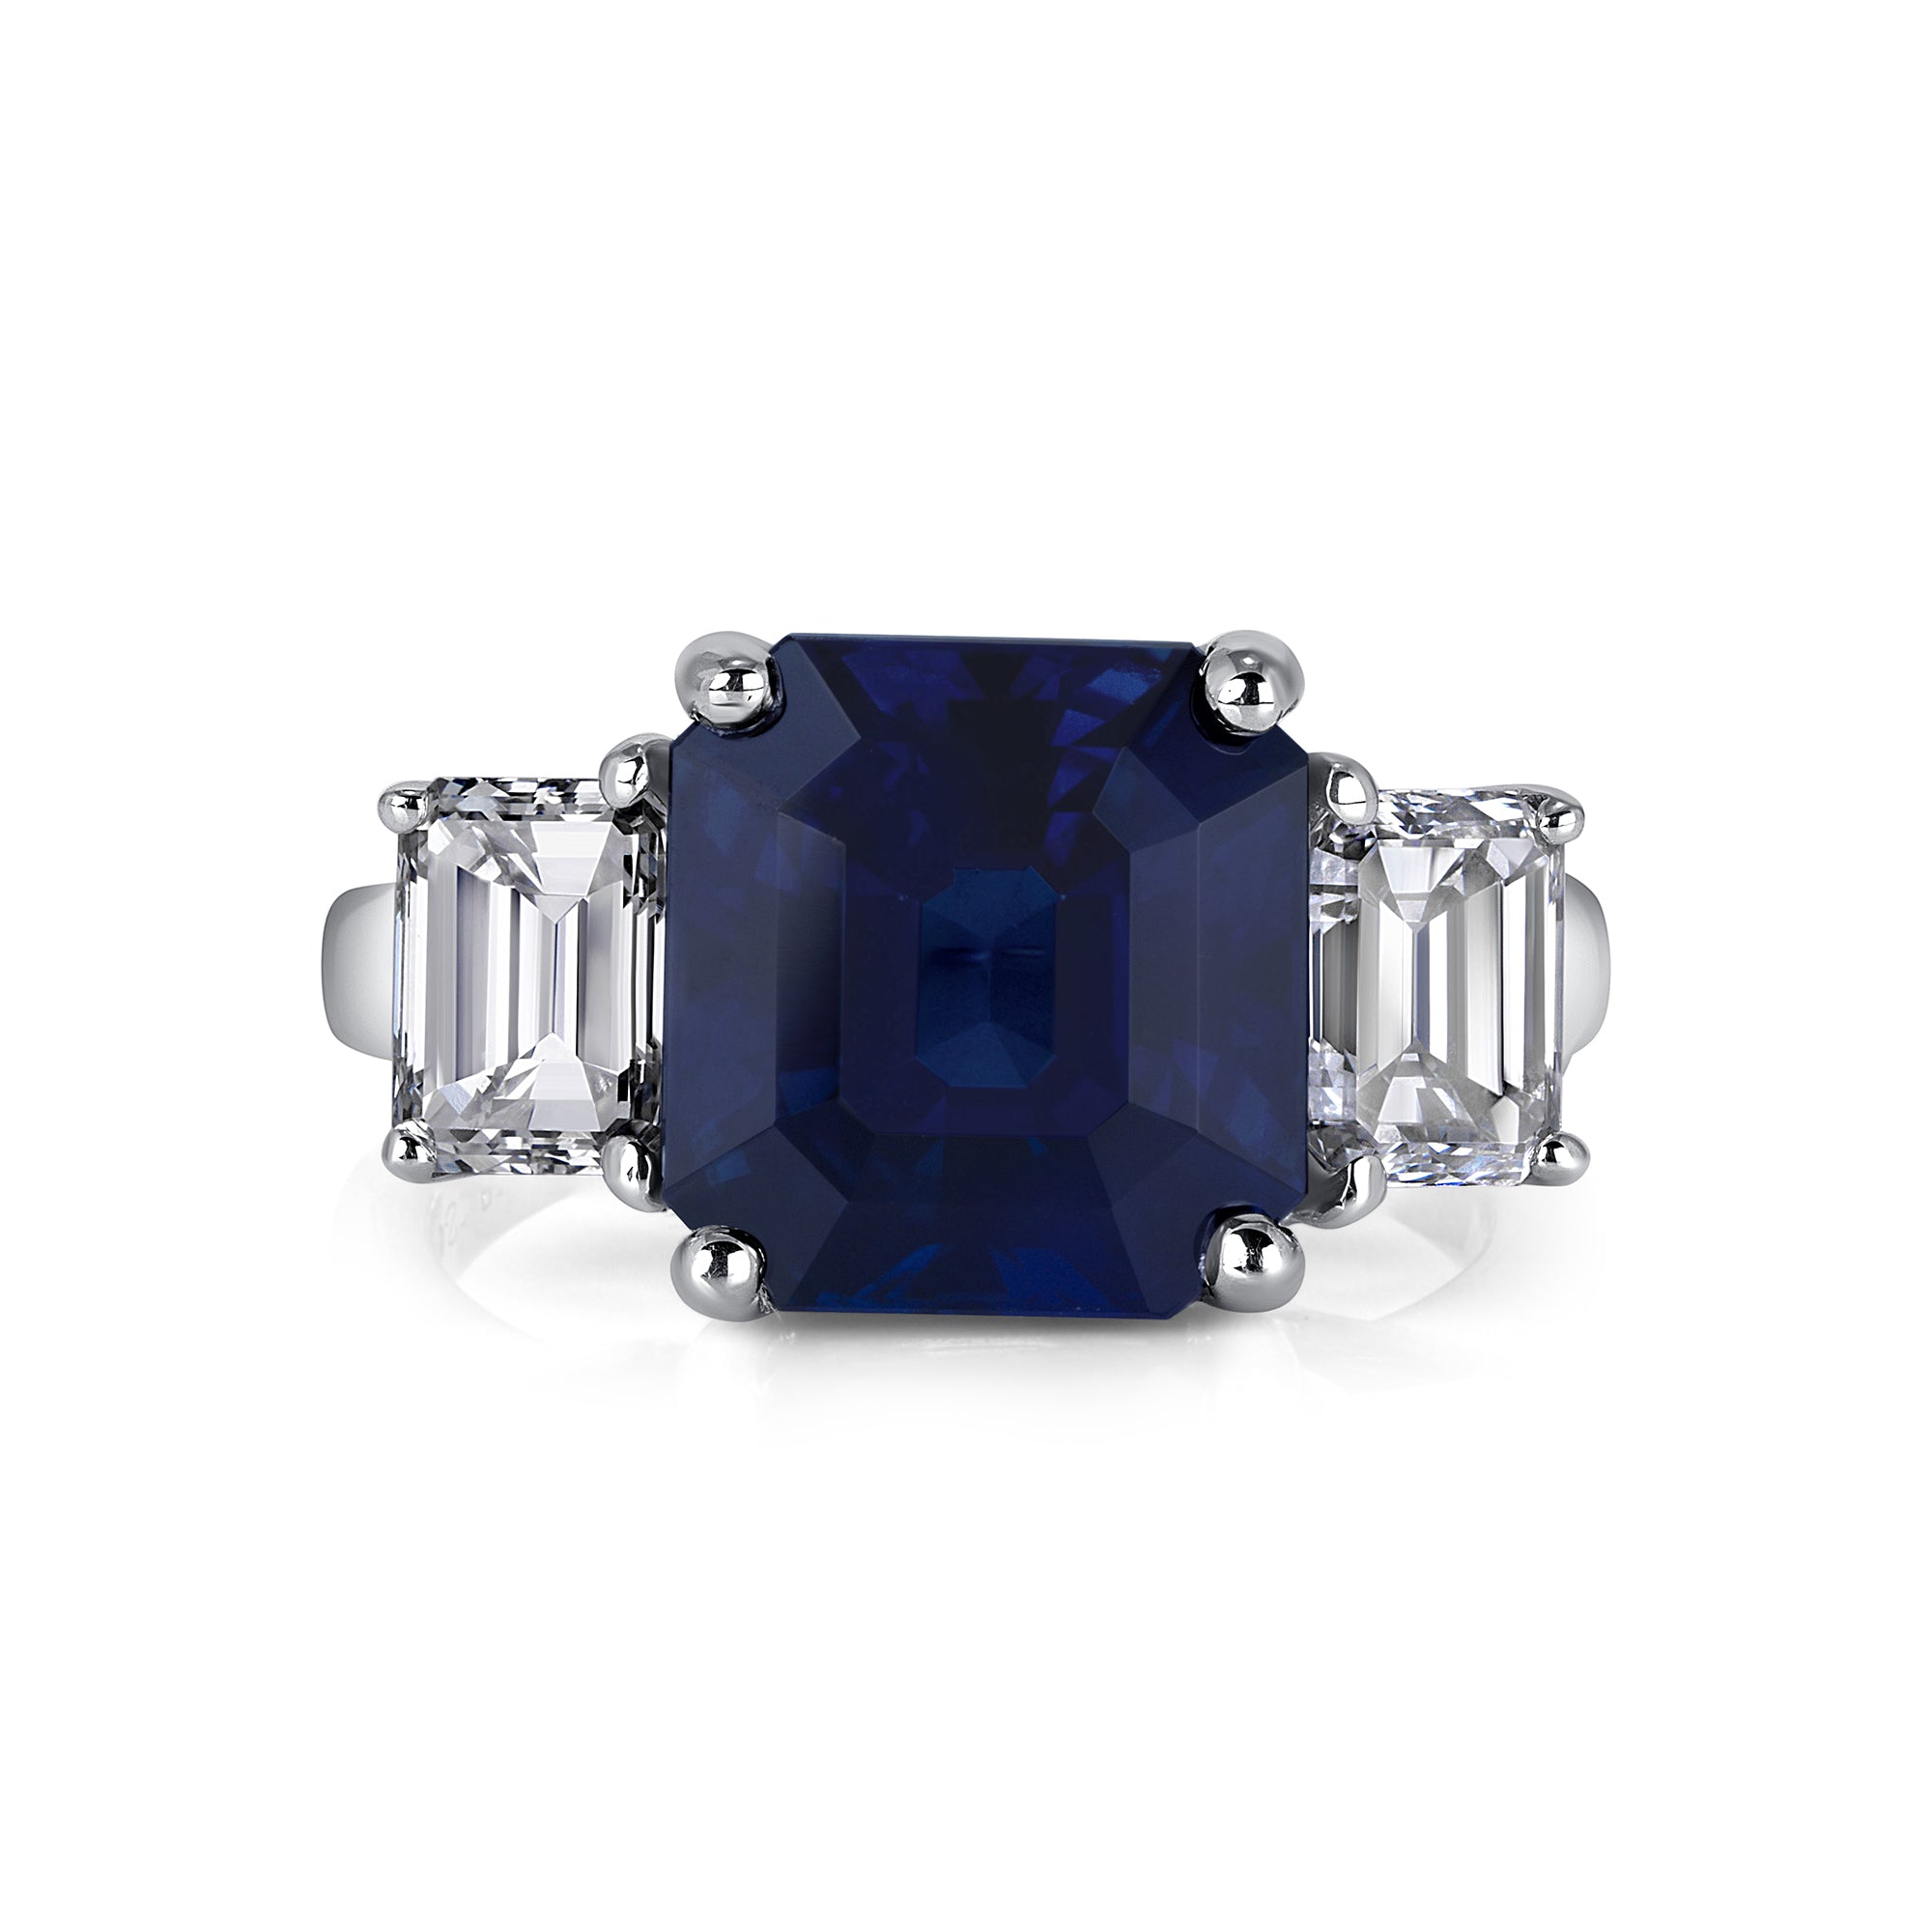 Asscher Cut Blue Sapphire Three Stone Ring with Emerald Cut Diamond Side Stones in Platinum Ruthenium